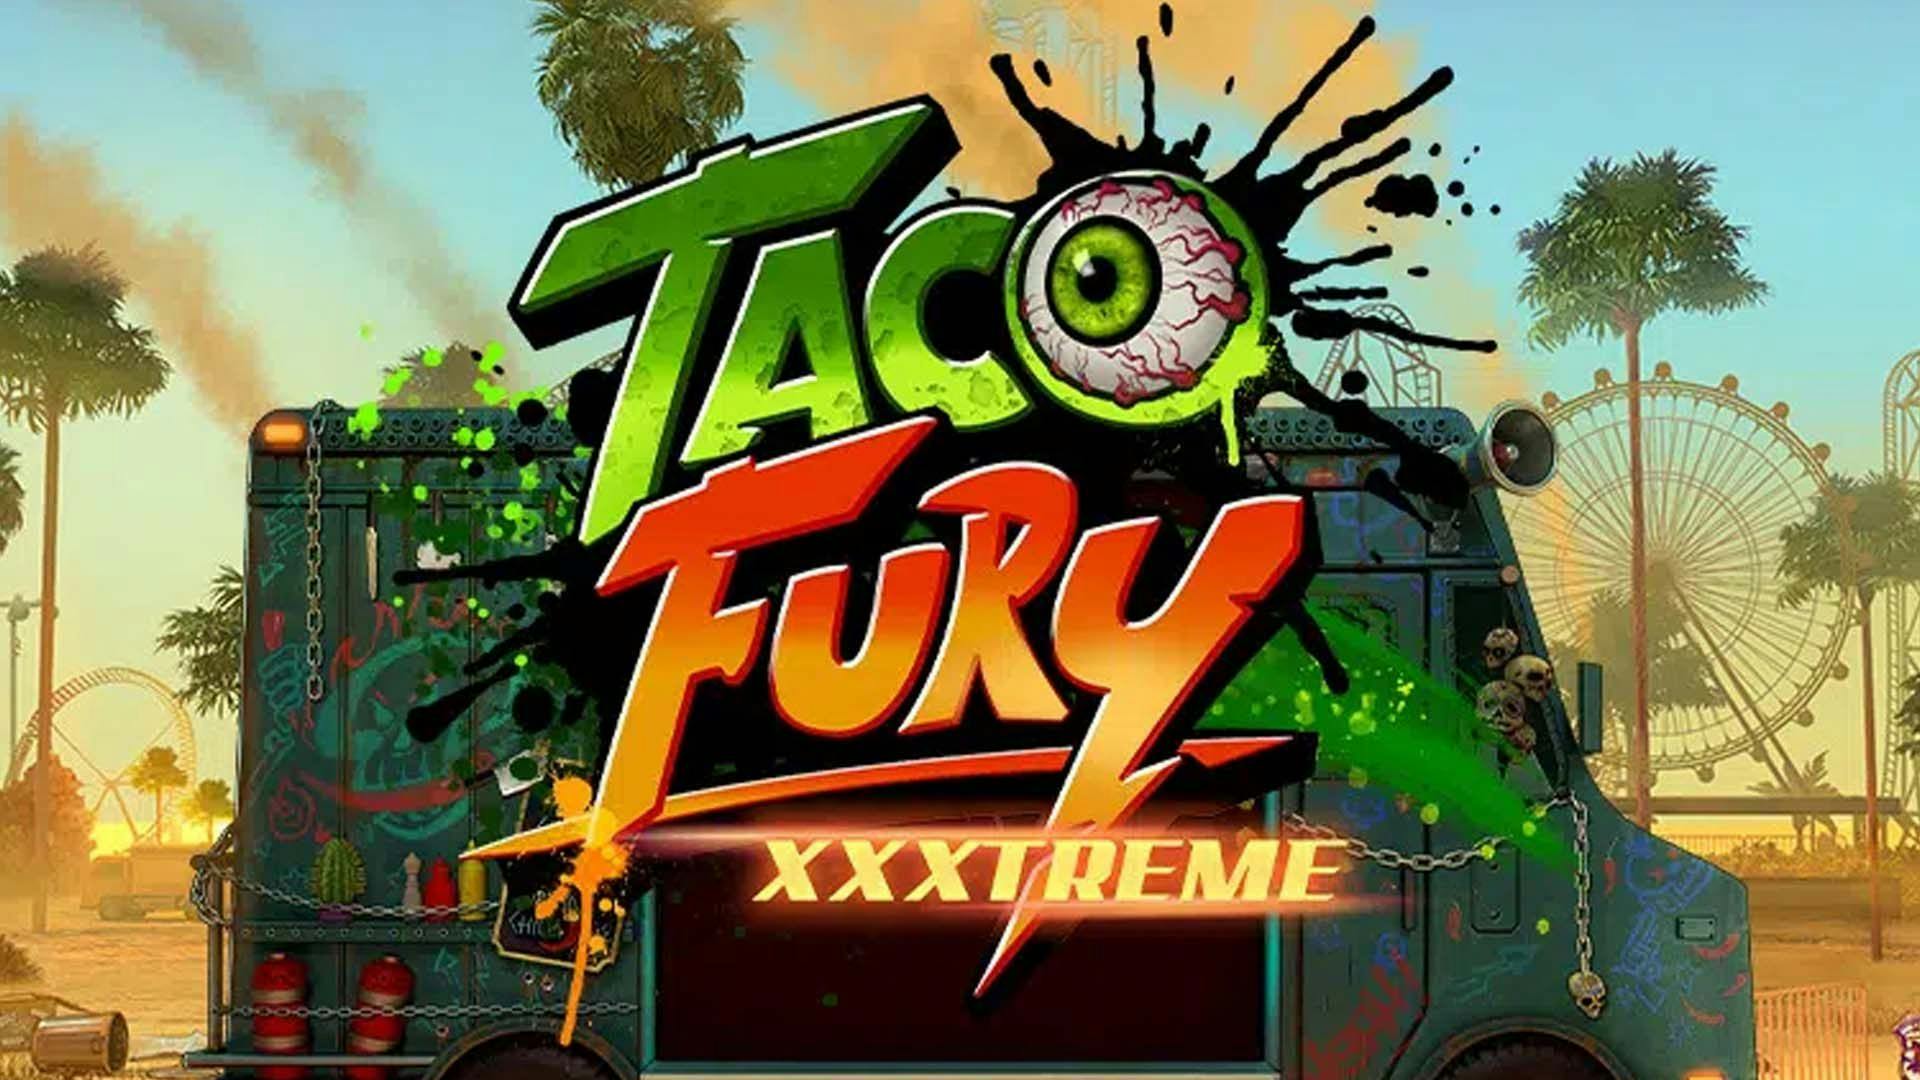 Taco Fury XXXtreme Slot Machine Online Free Game Play